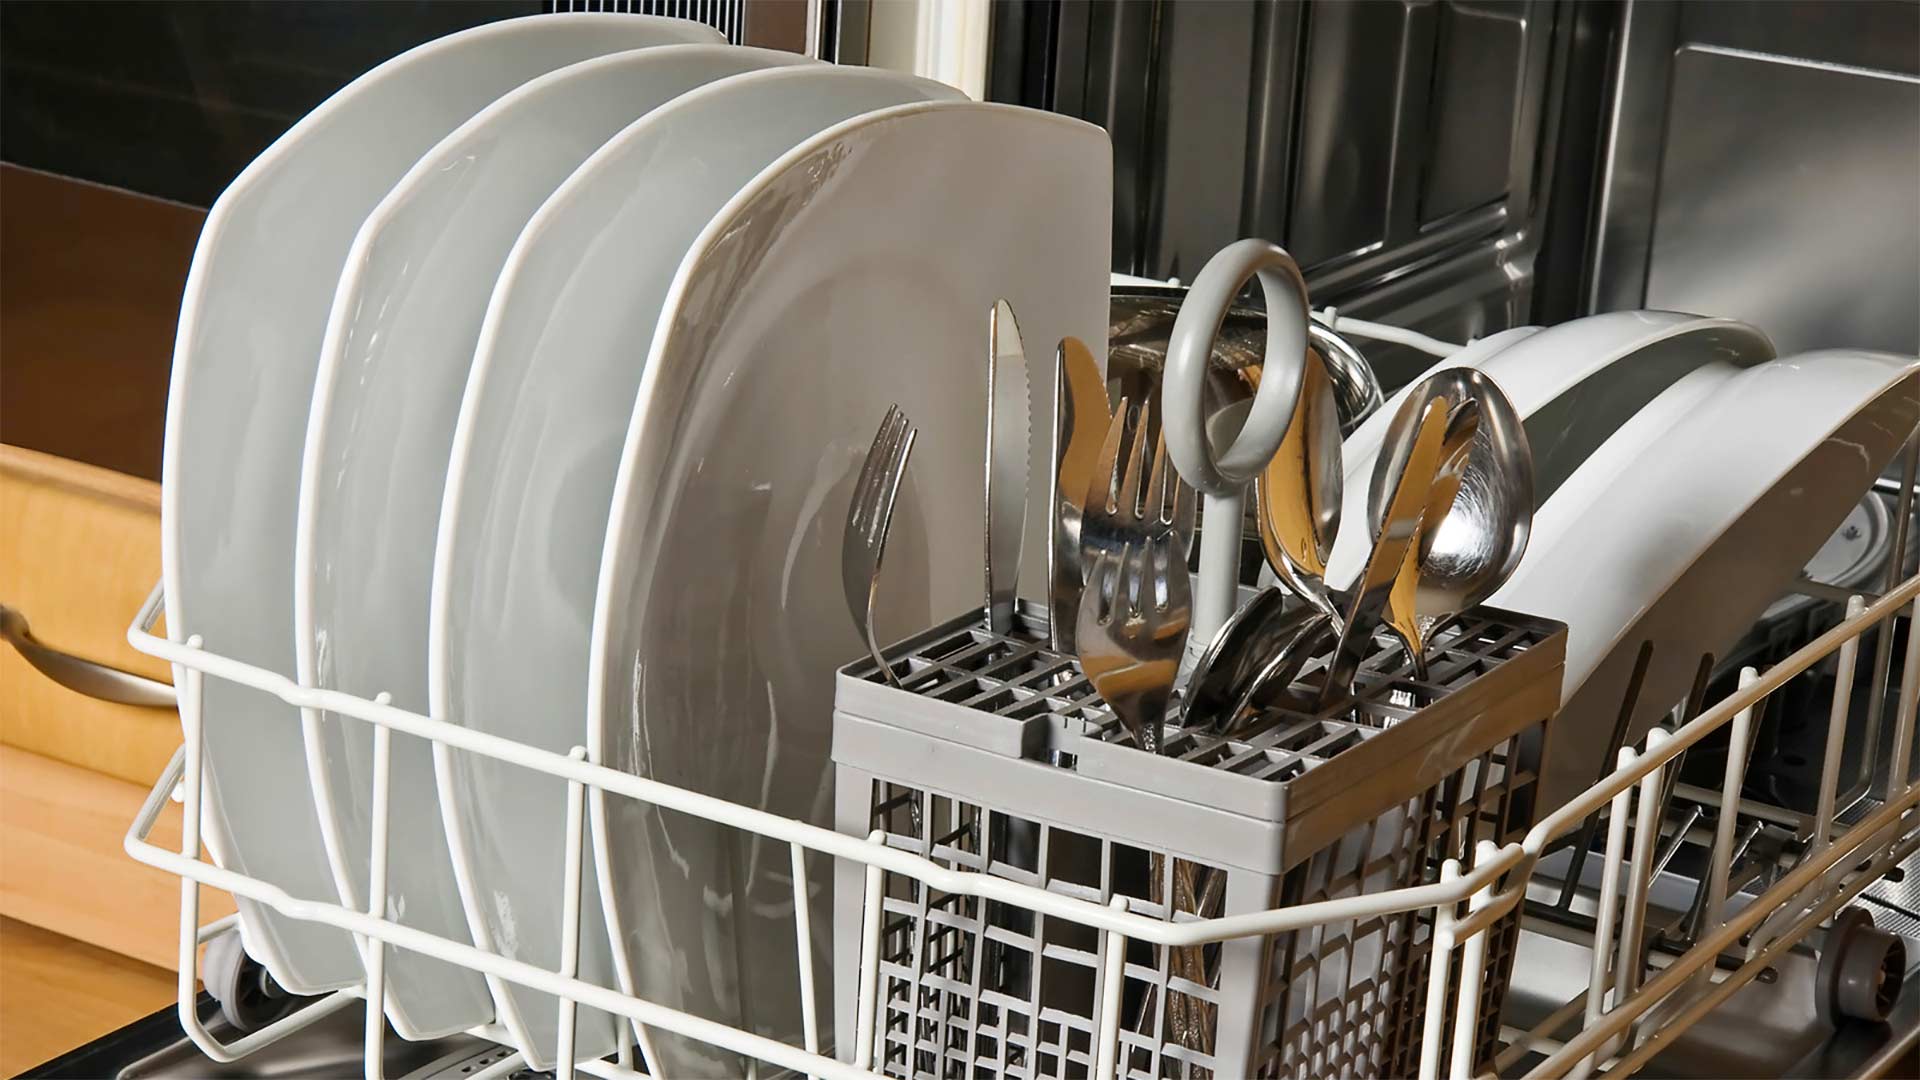 When Was Dishwasher Invented